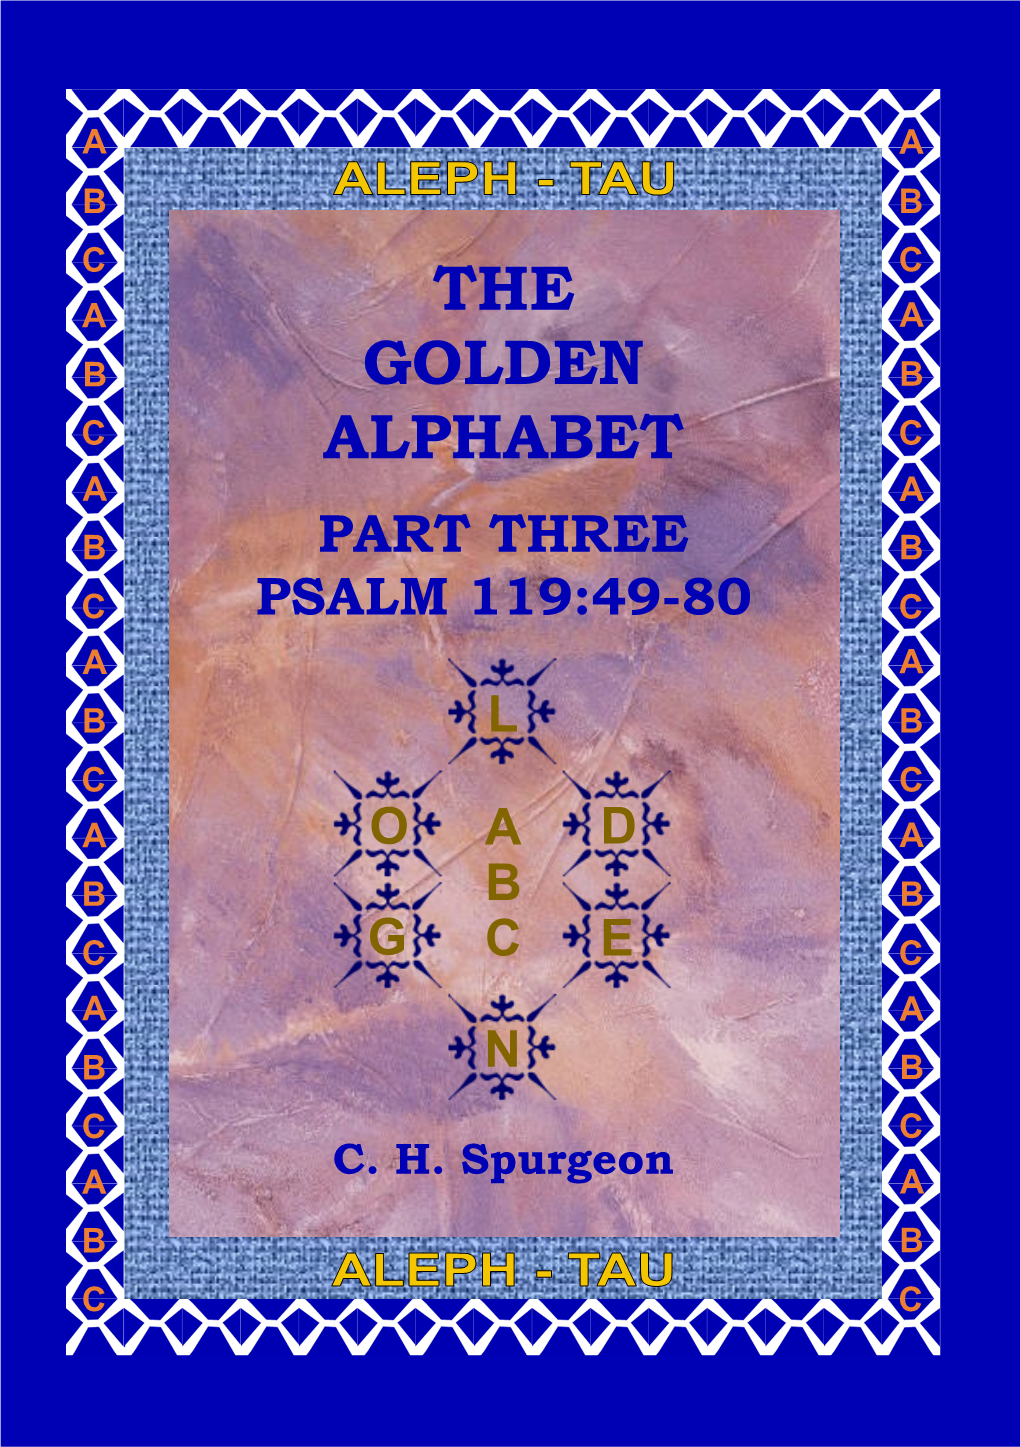 The Golden Alphabet — Part Three — Psalm 119:49-80 C